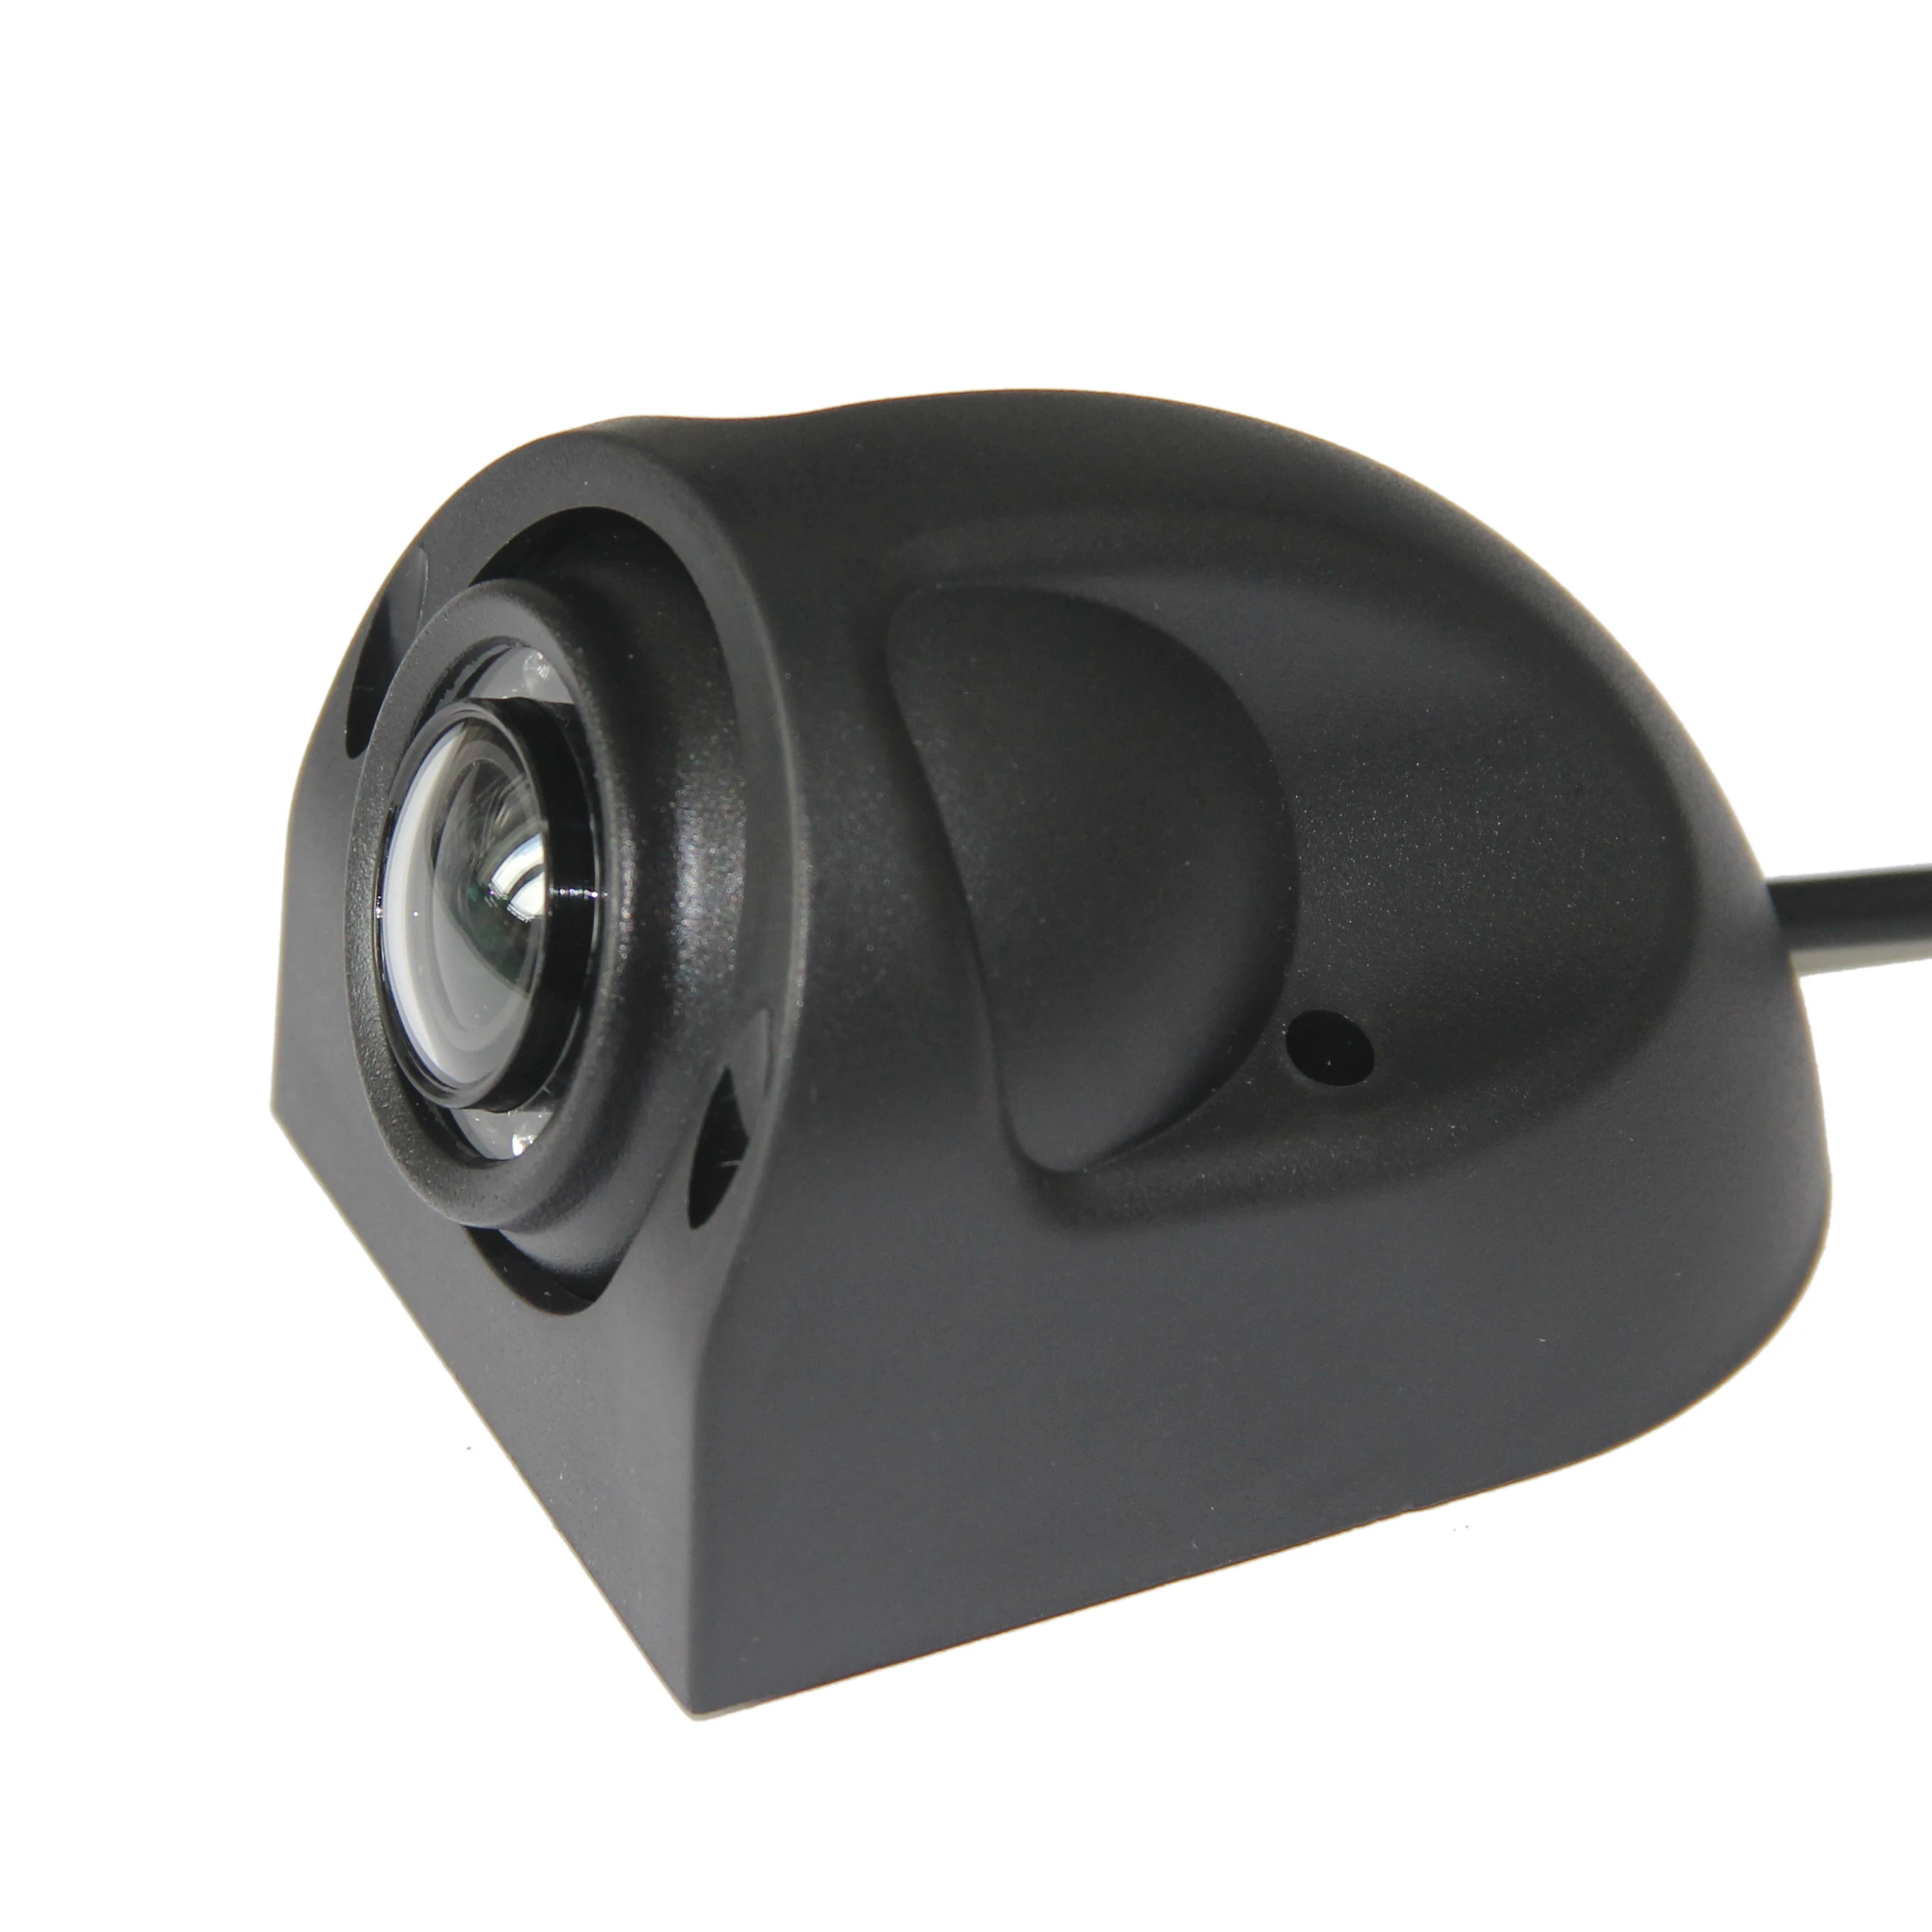 AHD Hidden Disguise COVERT CCTV Surveillance Camera 720P 960P 1080P BNC NTSC PAL 